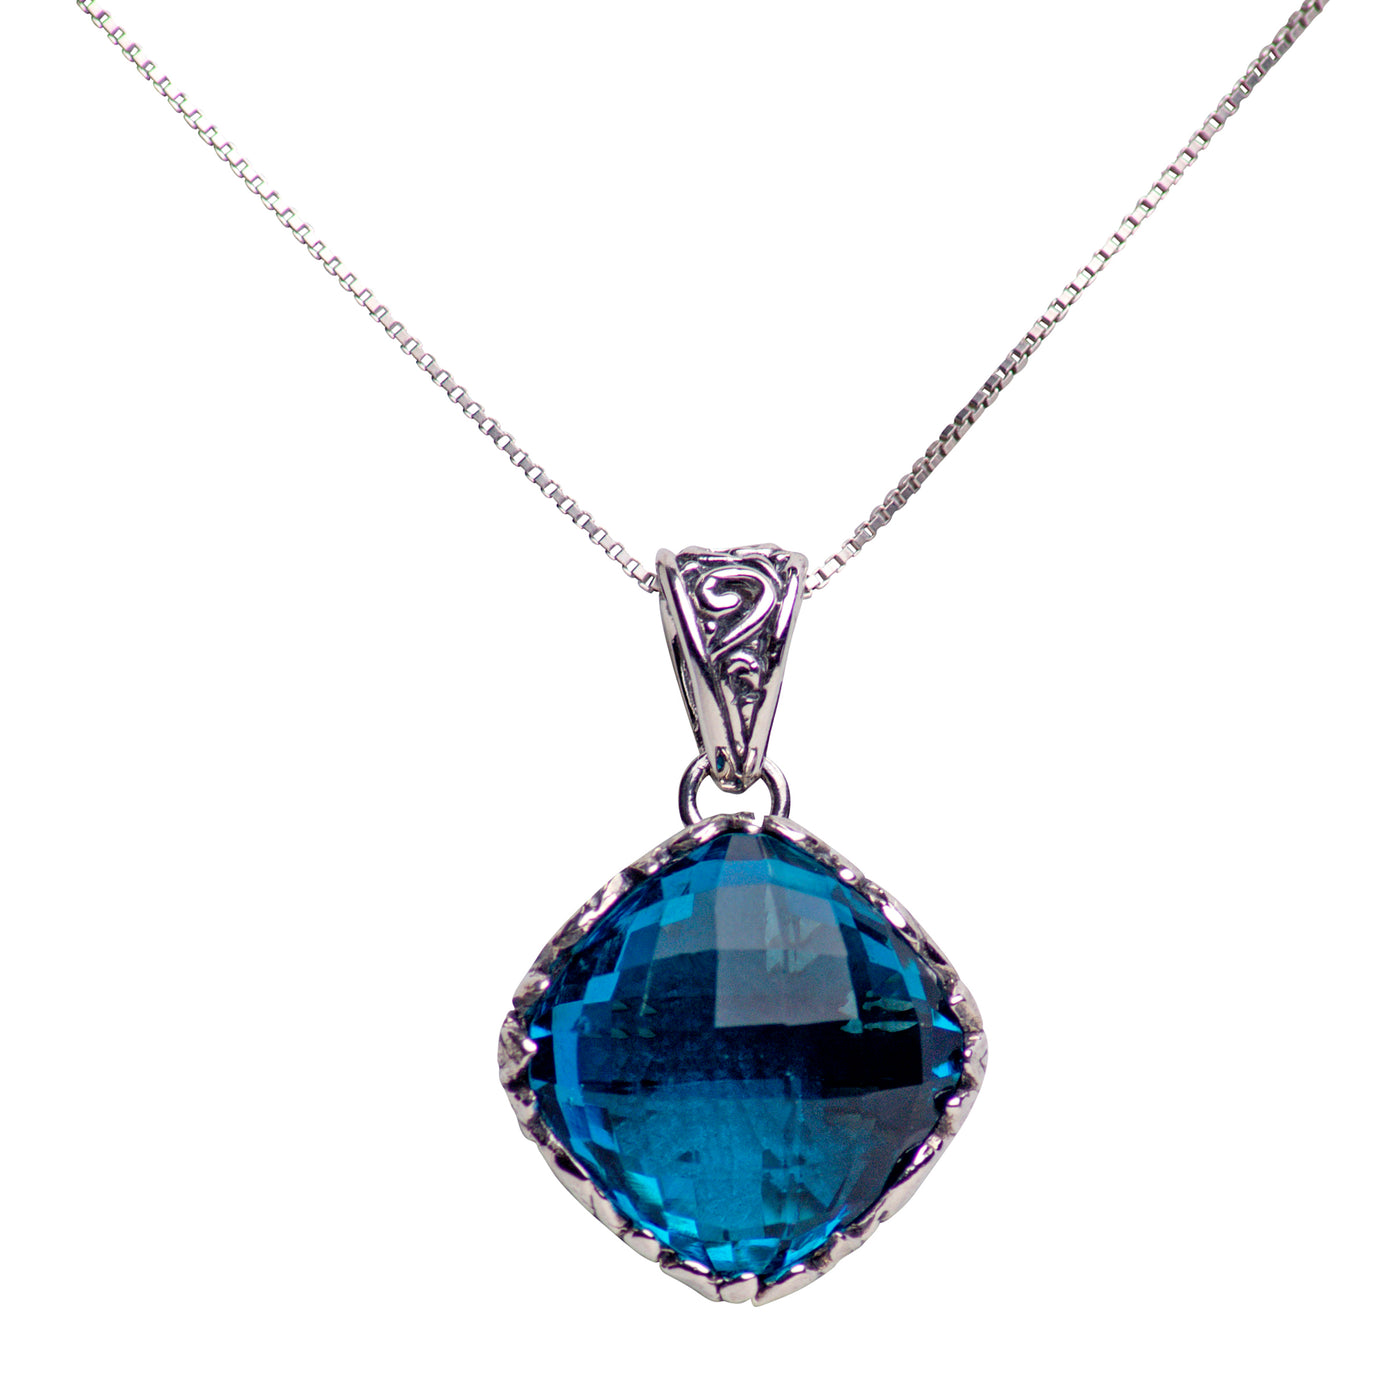 Diamond Shaped Blue Topaz Quartz and Sterling Silver Pendant Necklace